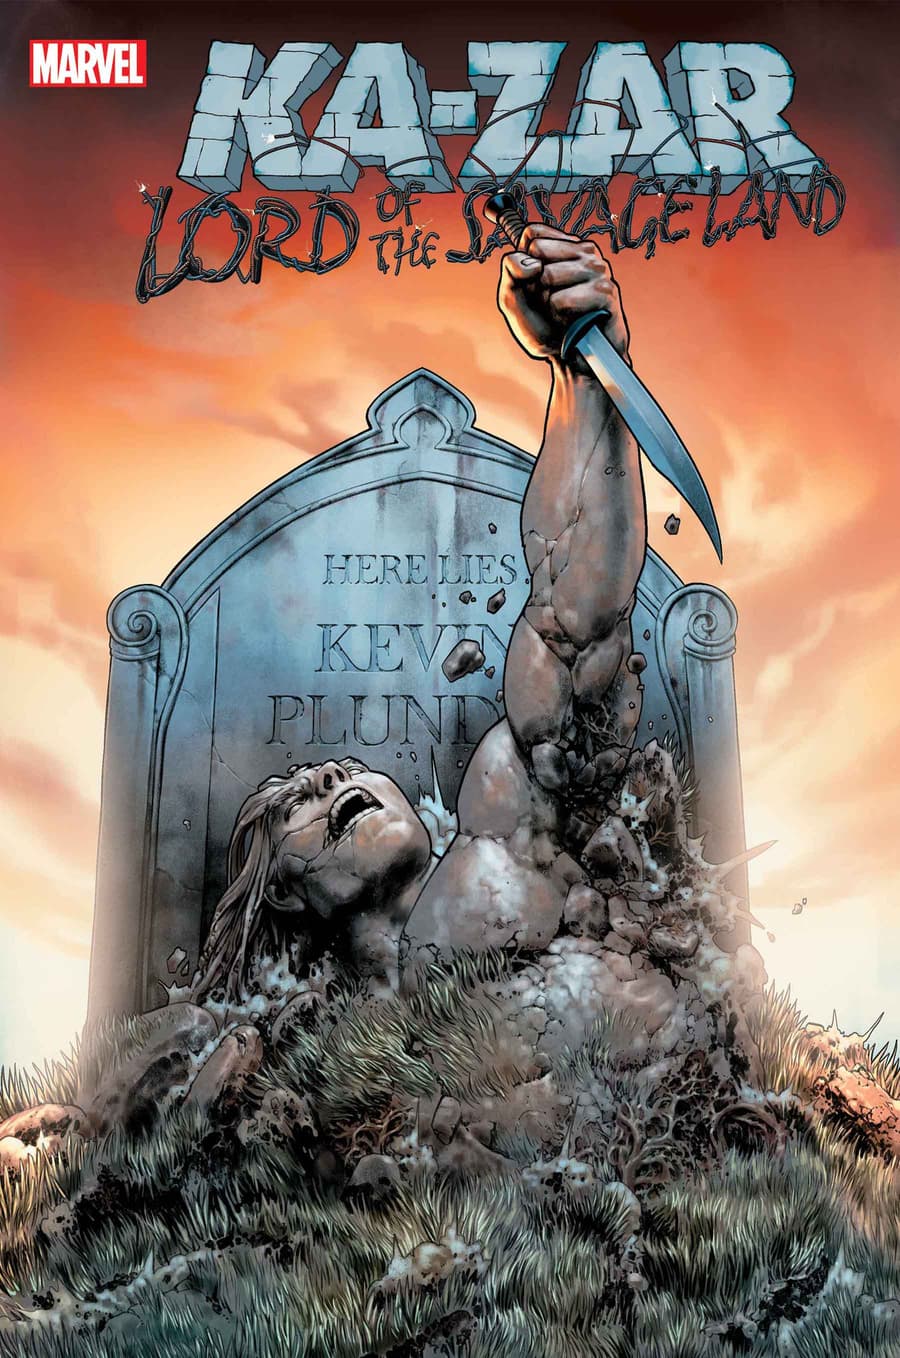 KA-ZAR: LORD OF THE SAVAGE LAND #1 cover by Jesús Saiz